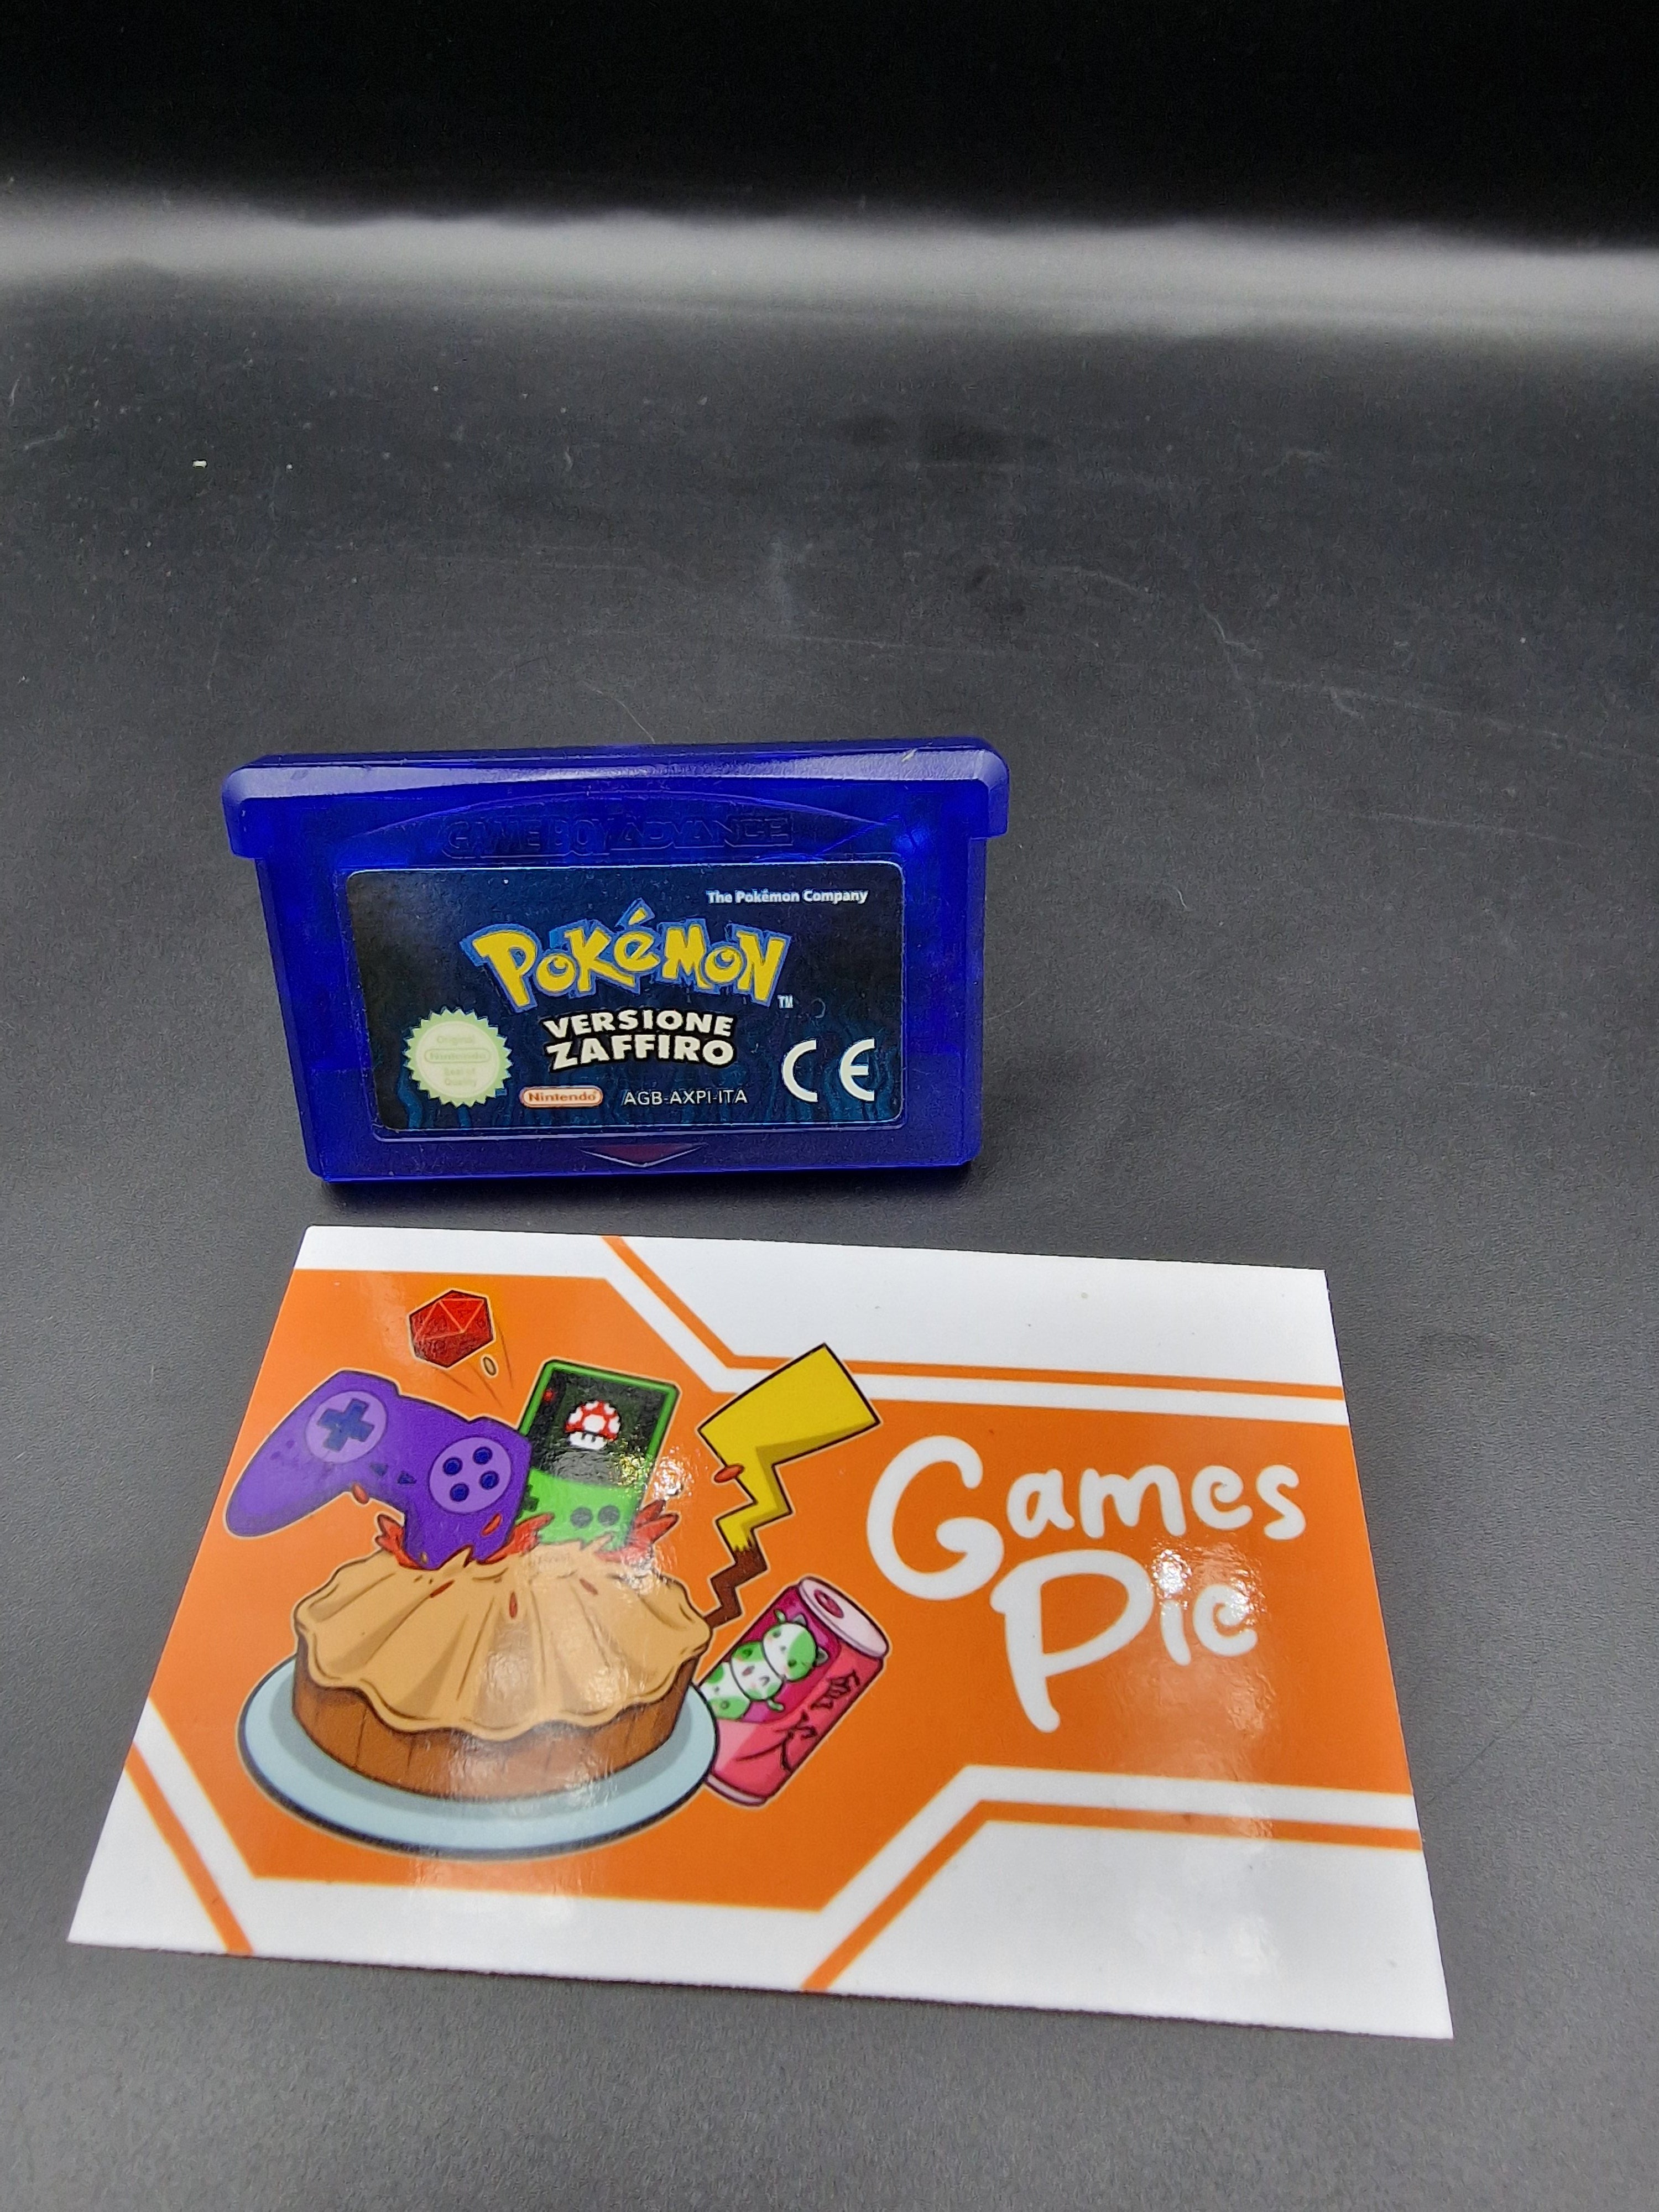 Pokémon Versione Zaffiro Game Boy Advance